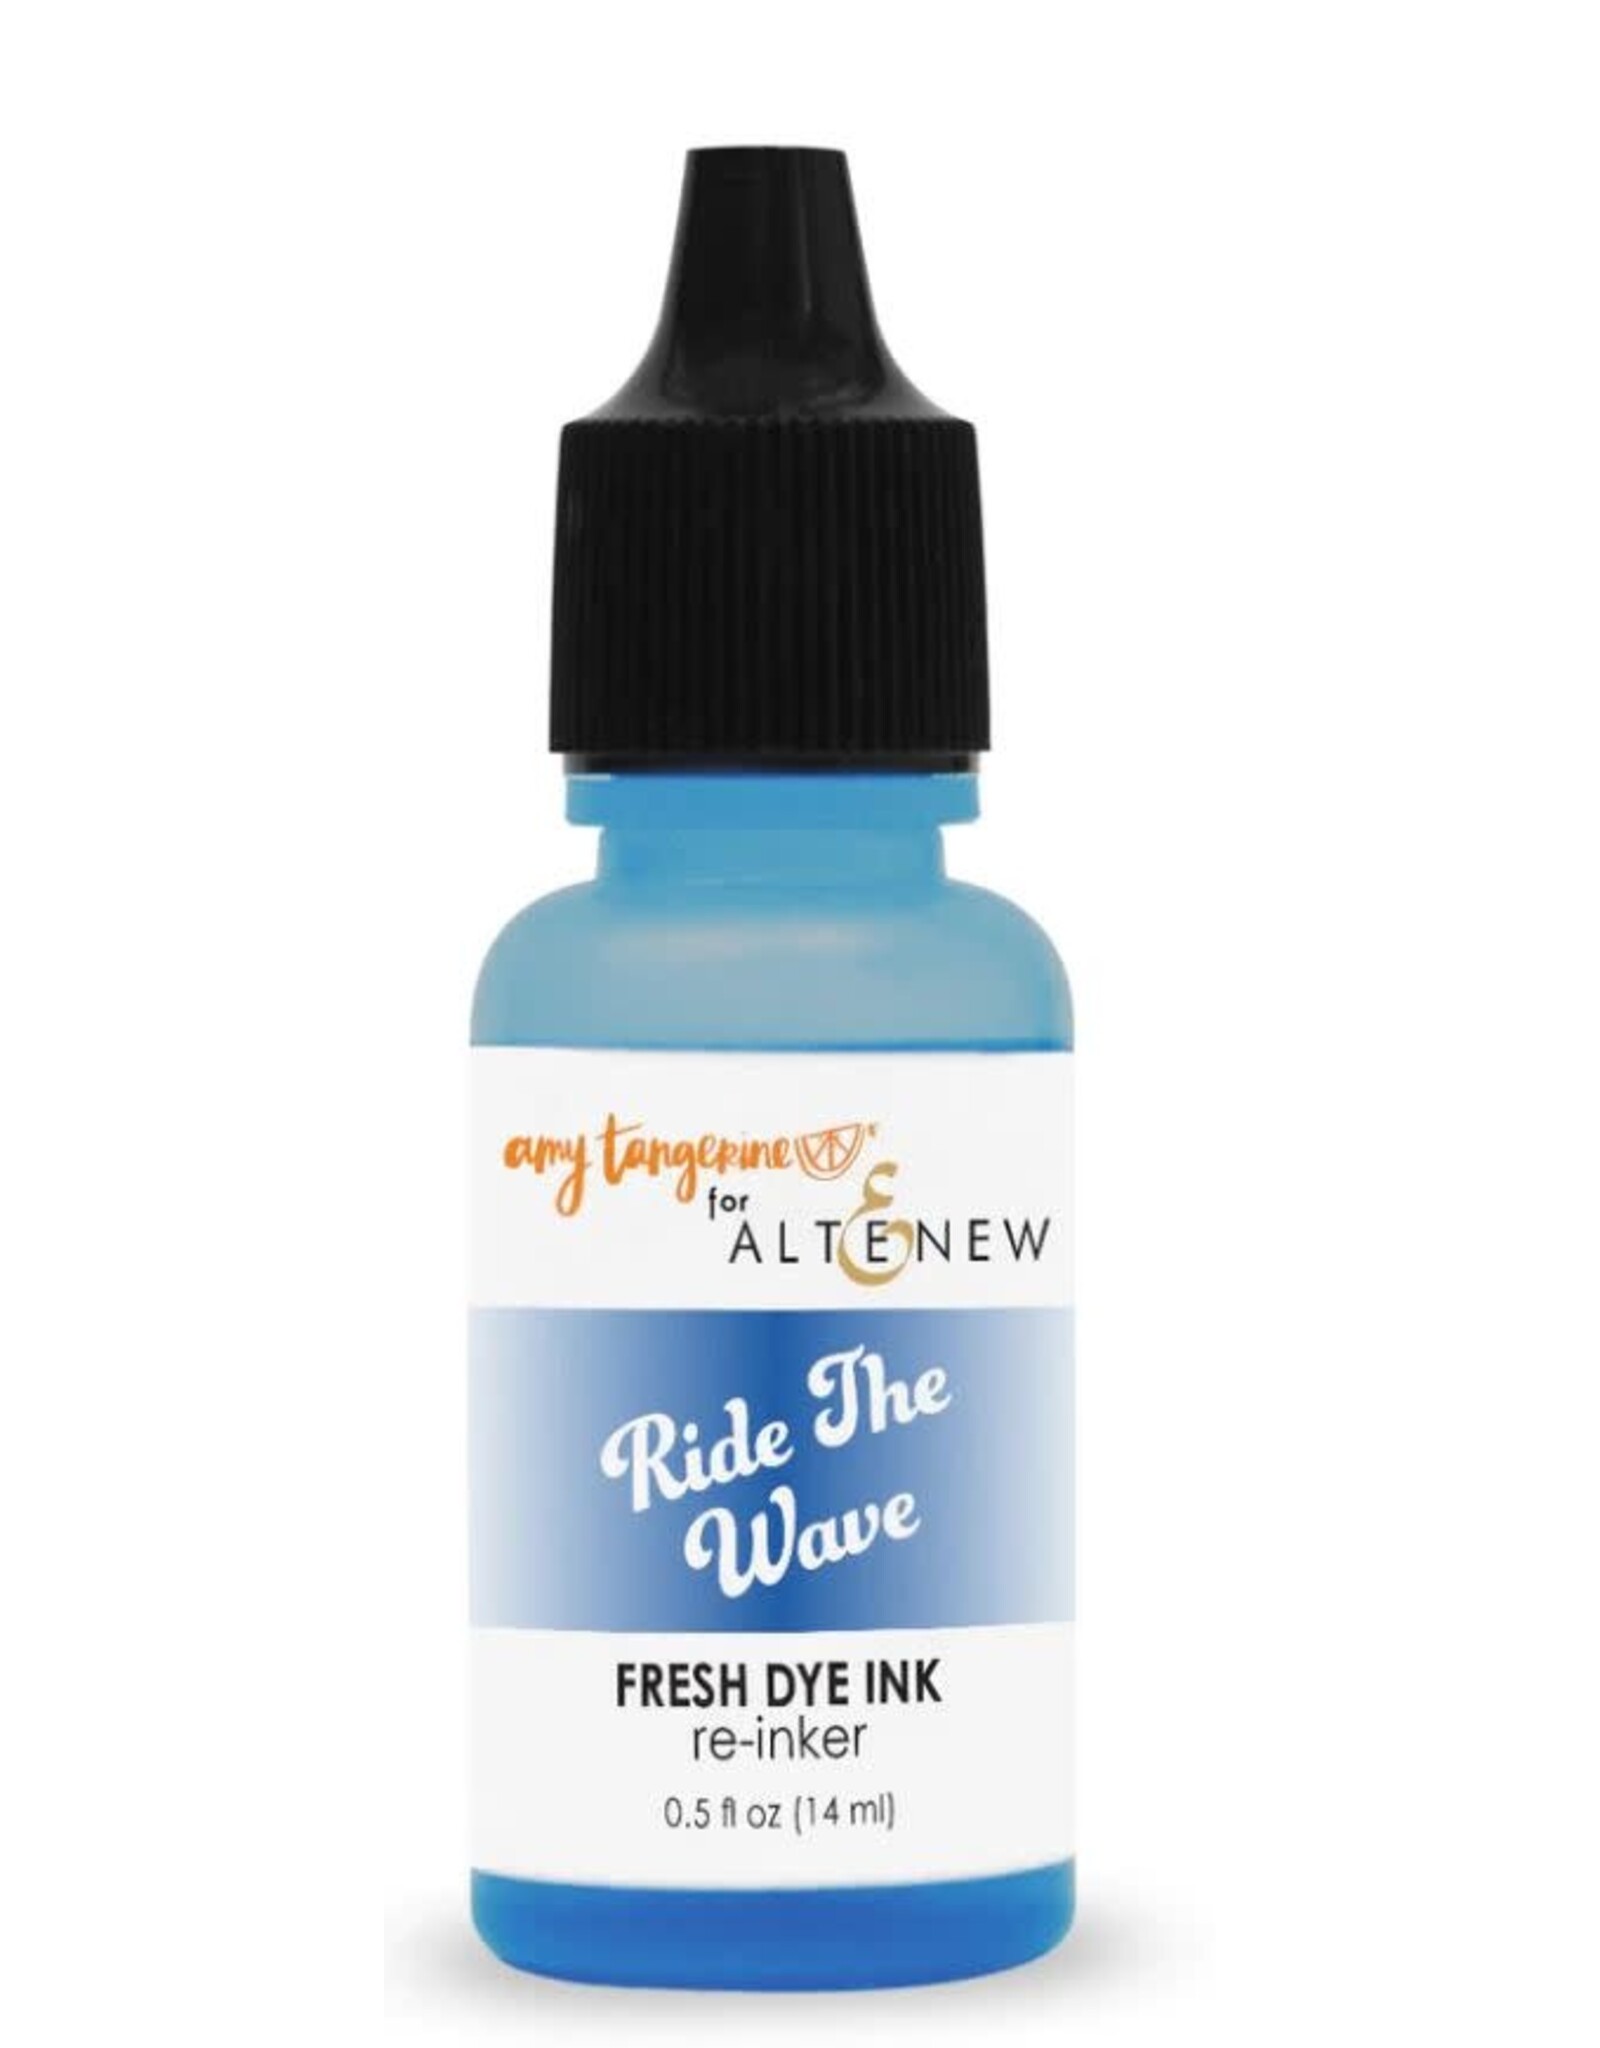 ALTENEW Amy Tangerine for Altenew- Summer Dreams Fresh Dye Ink Re-inker - Ride the Wave